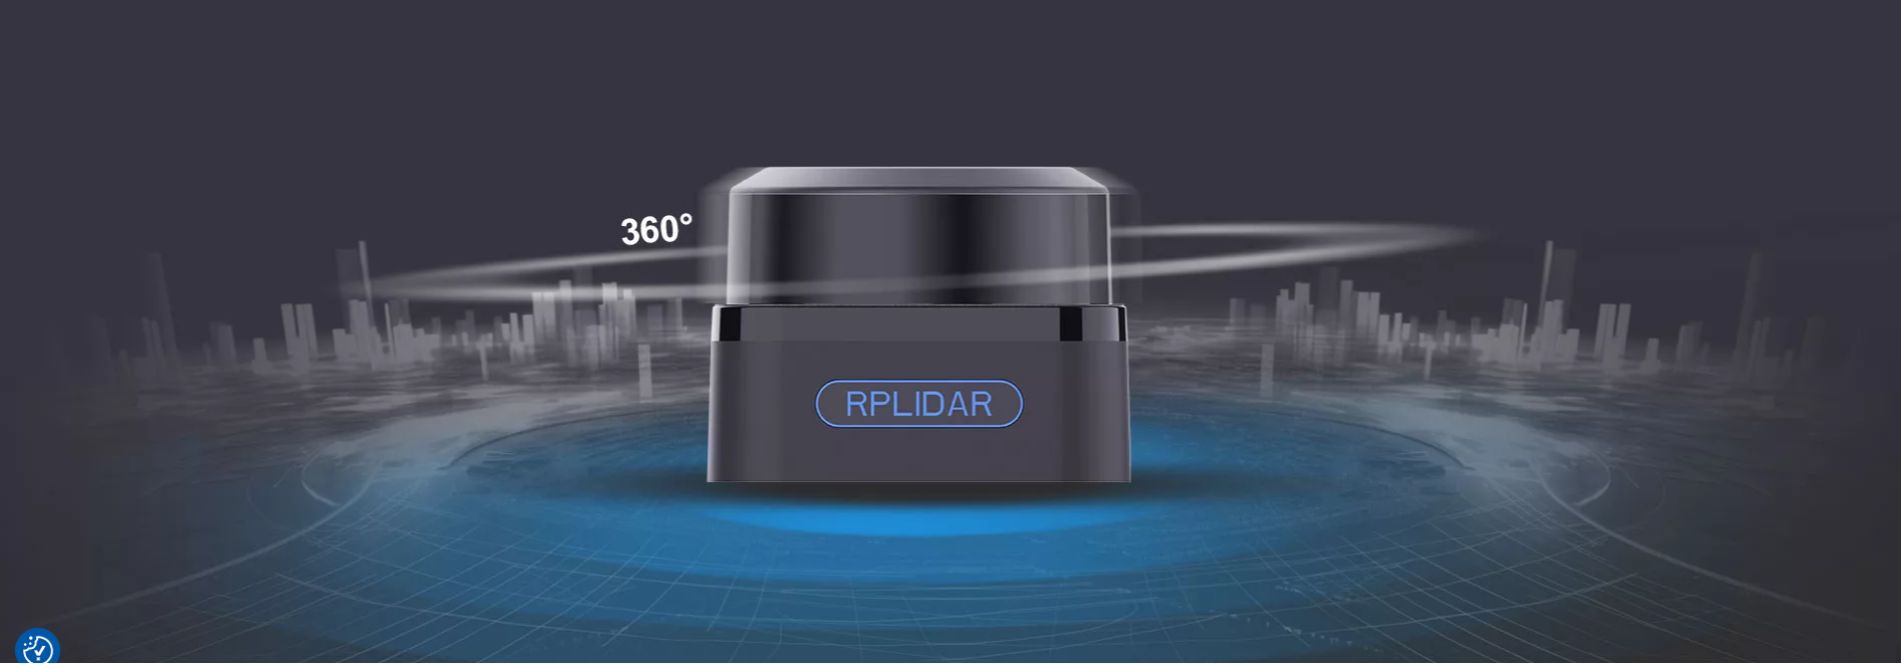 RPLIDAR-S3-produktseite-1